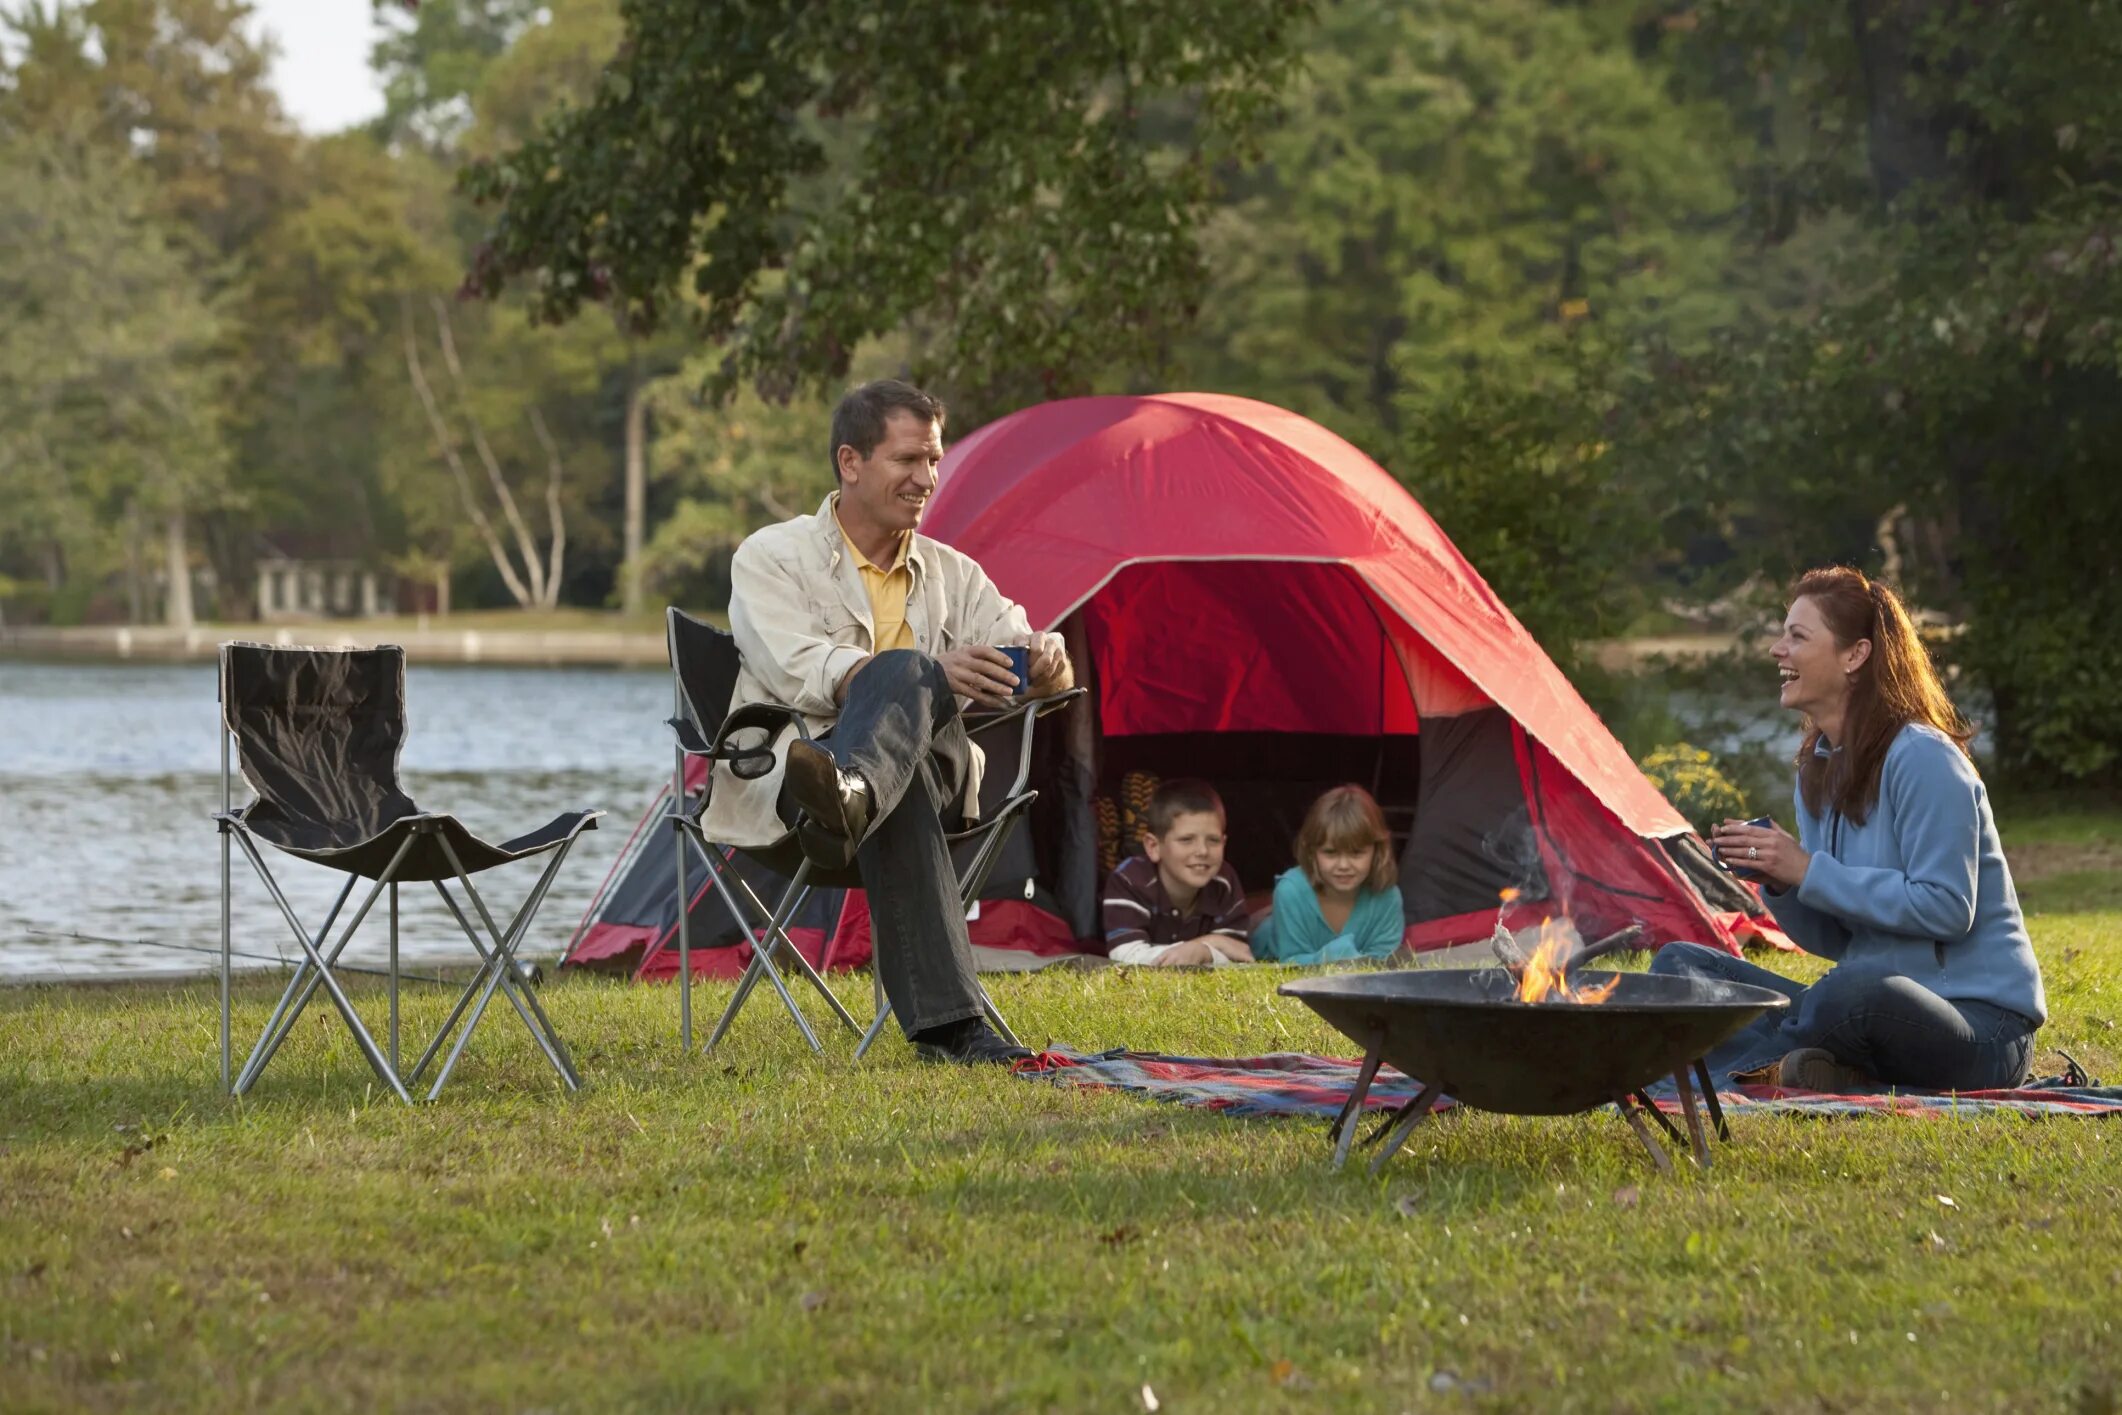 Включи camping. Палатка на природе. Отдыхаем на природе. Пикник с семьей на природе. Пикник на природе с палатками.